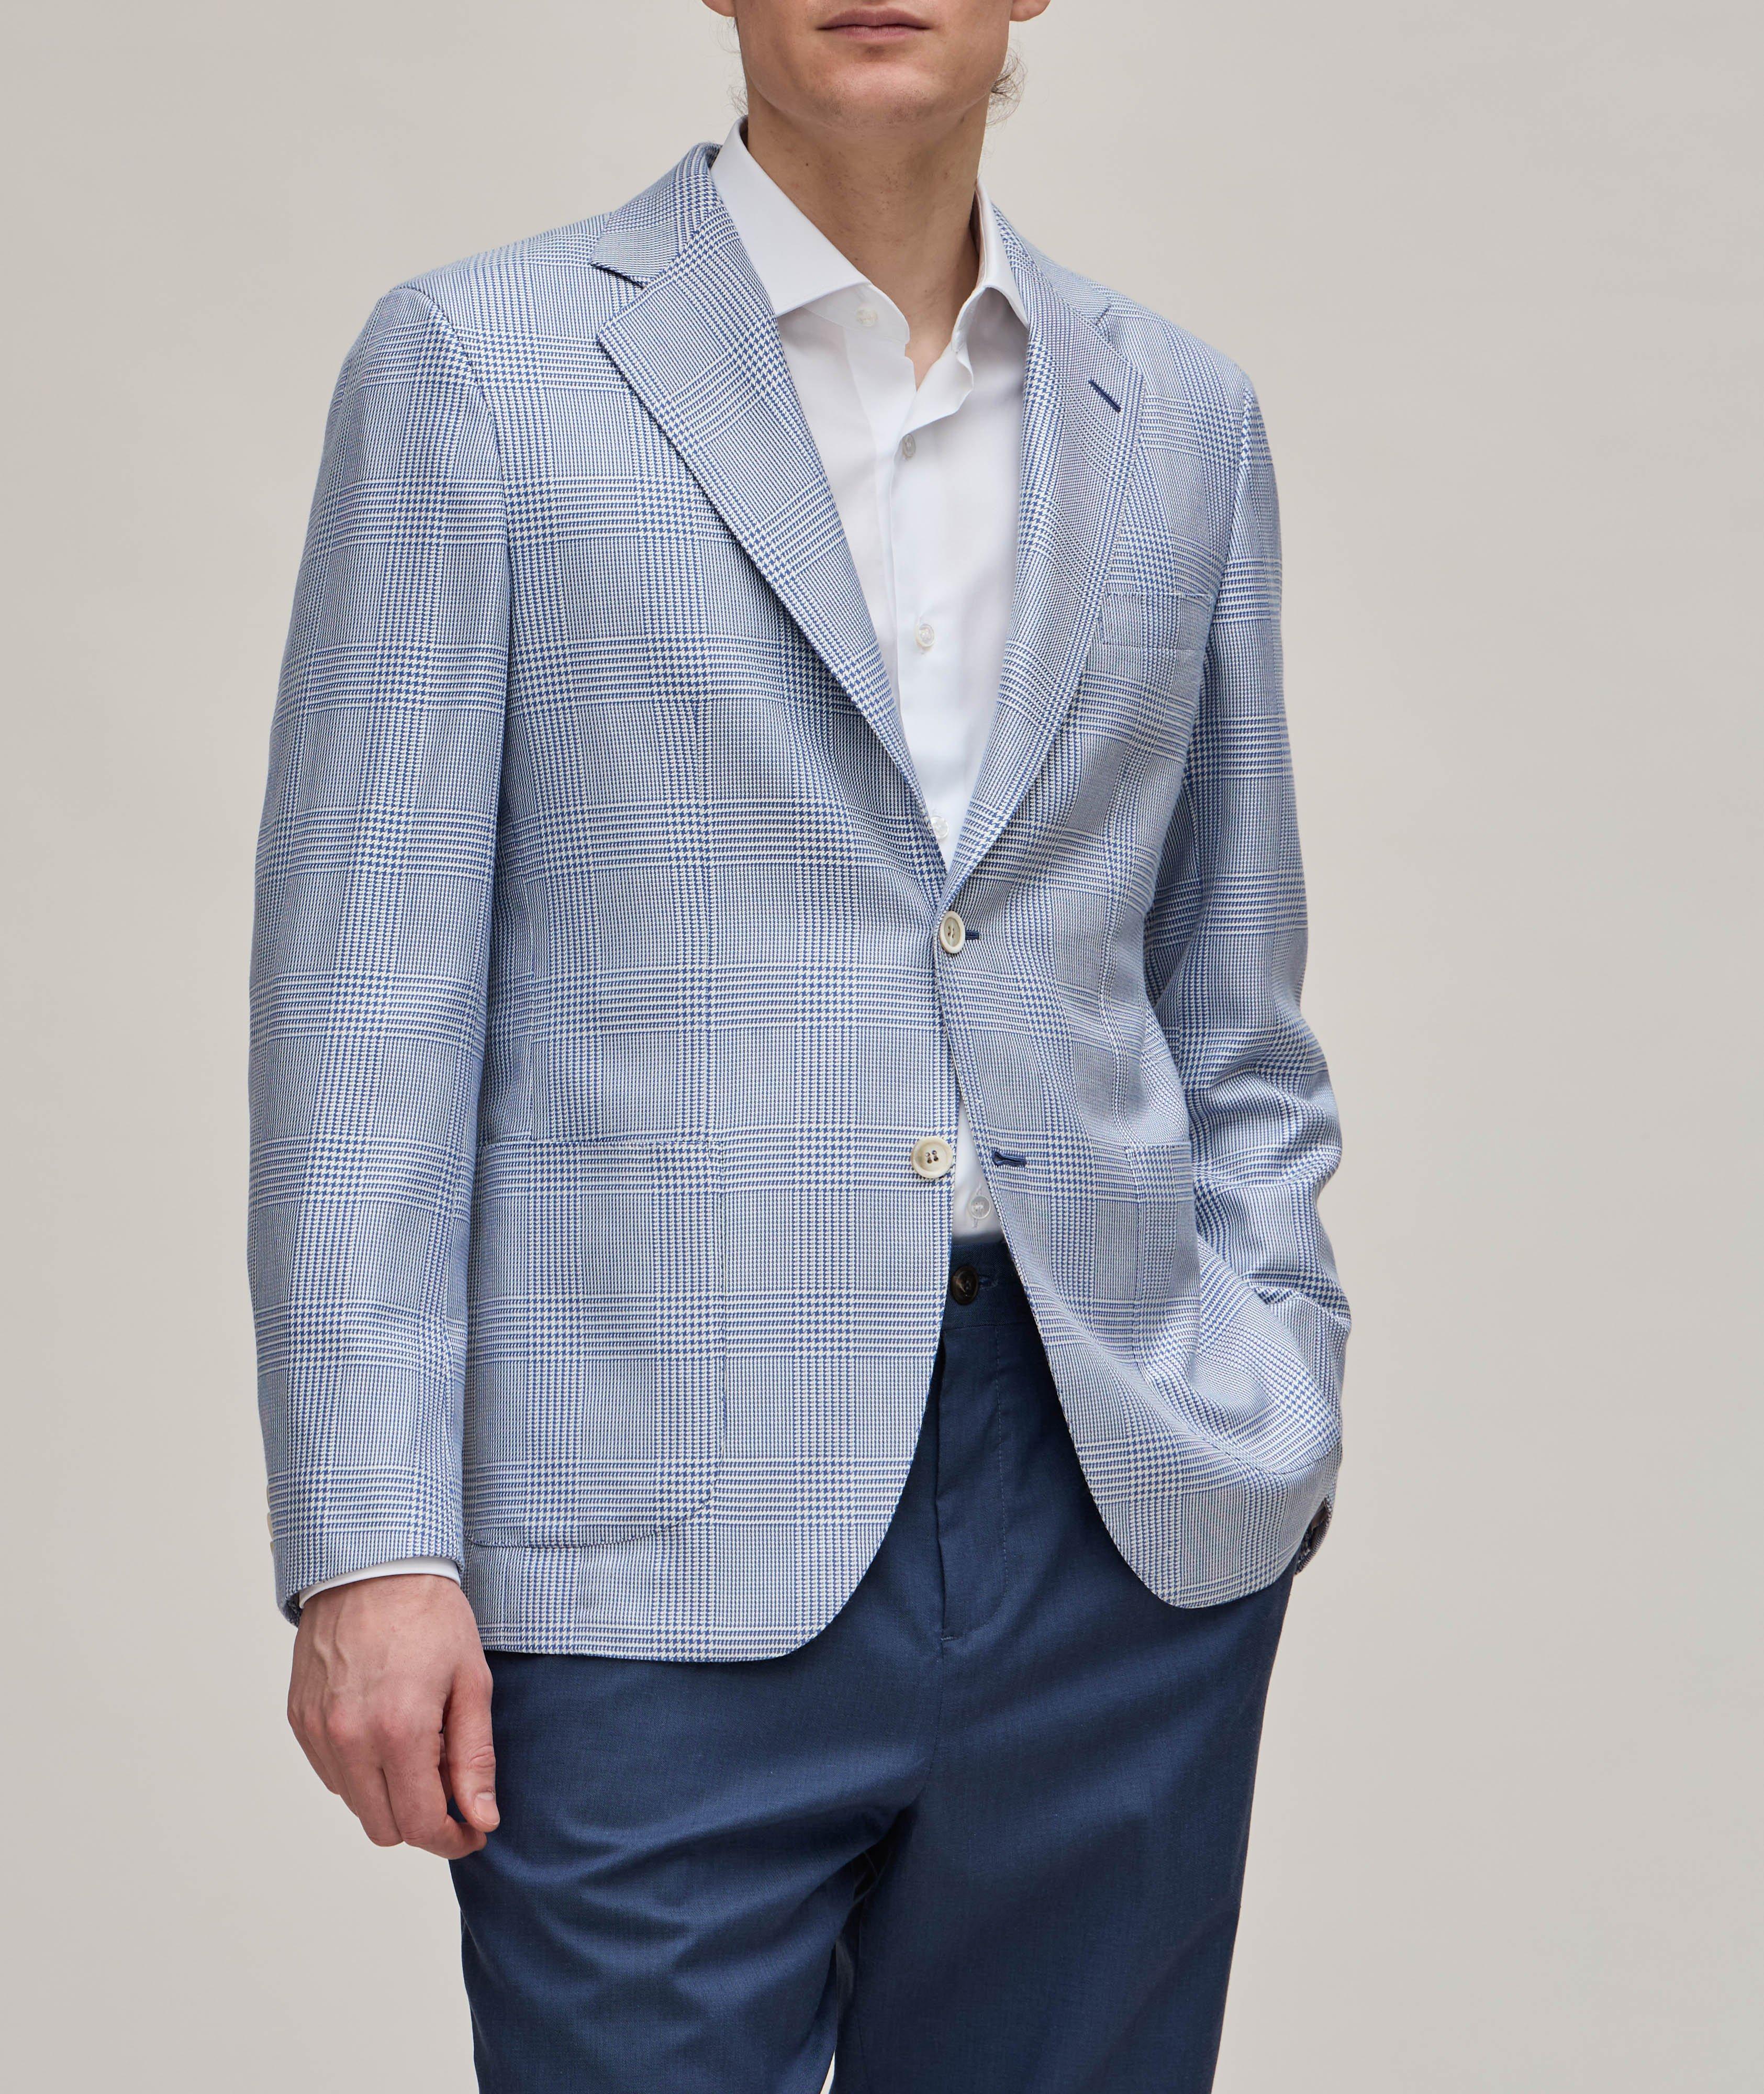 New Plume Prince of Wales Wool-Silk Sport Jacket image 1